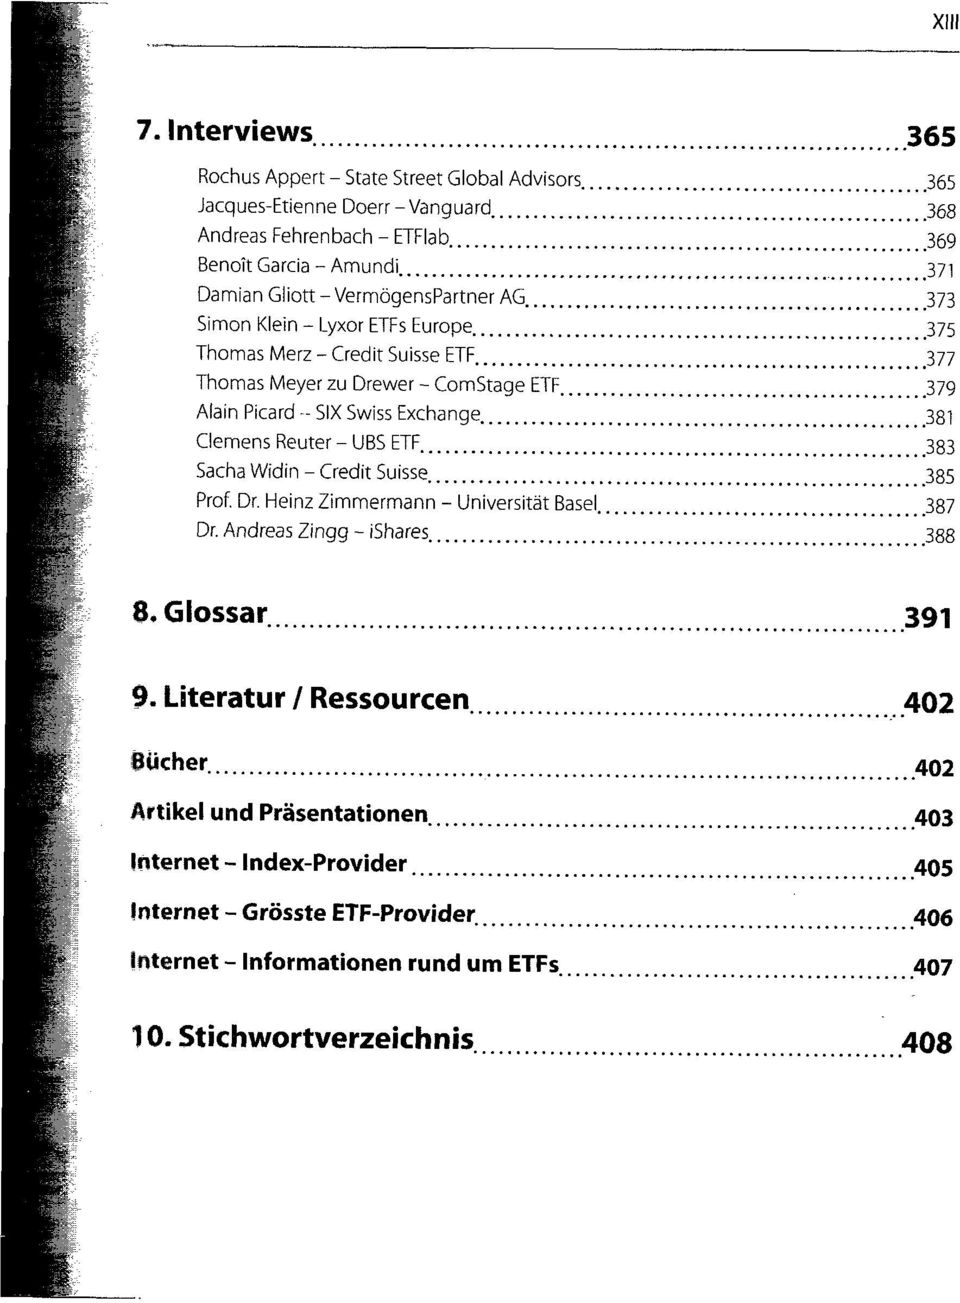 Meyer zu Drewer - ComStage ETF 379 Alain Picard - SIX Swiss Exchange 381 Clemens Reuter - UBS ETF 383 Sacha Widin - Credit Suisse 385 Prof. Dr. Heinz Zimmermann - Universität Basel 387 Dr.